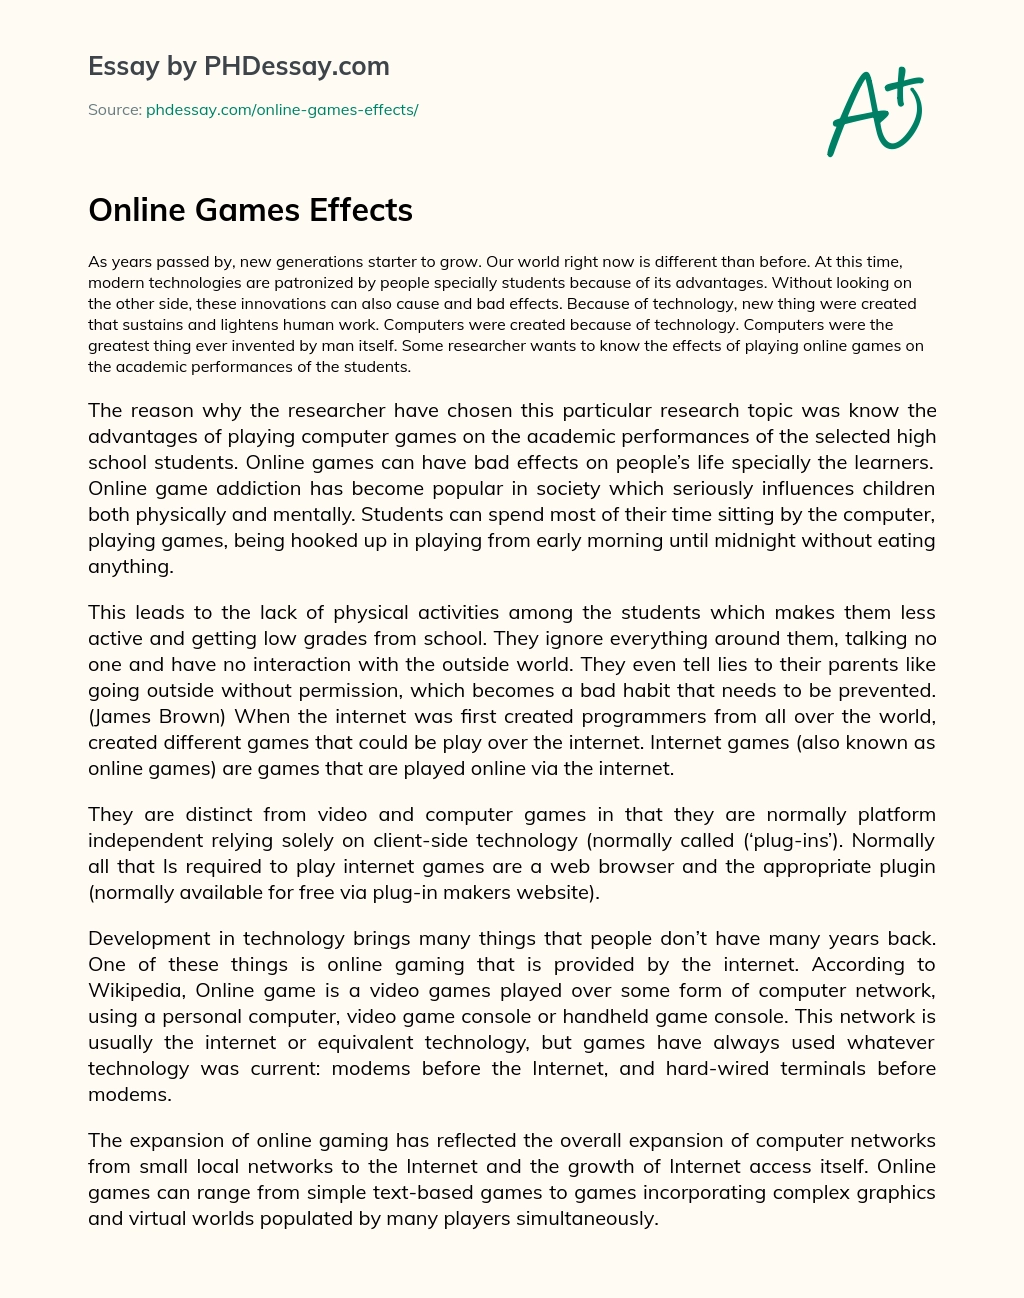 Online Games Effects essay